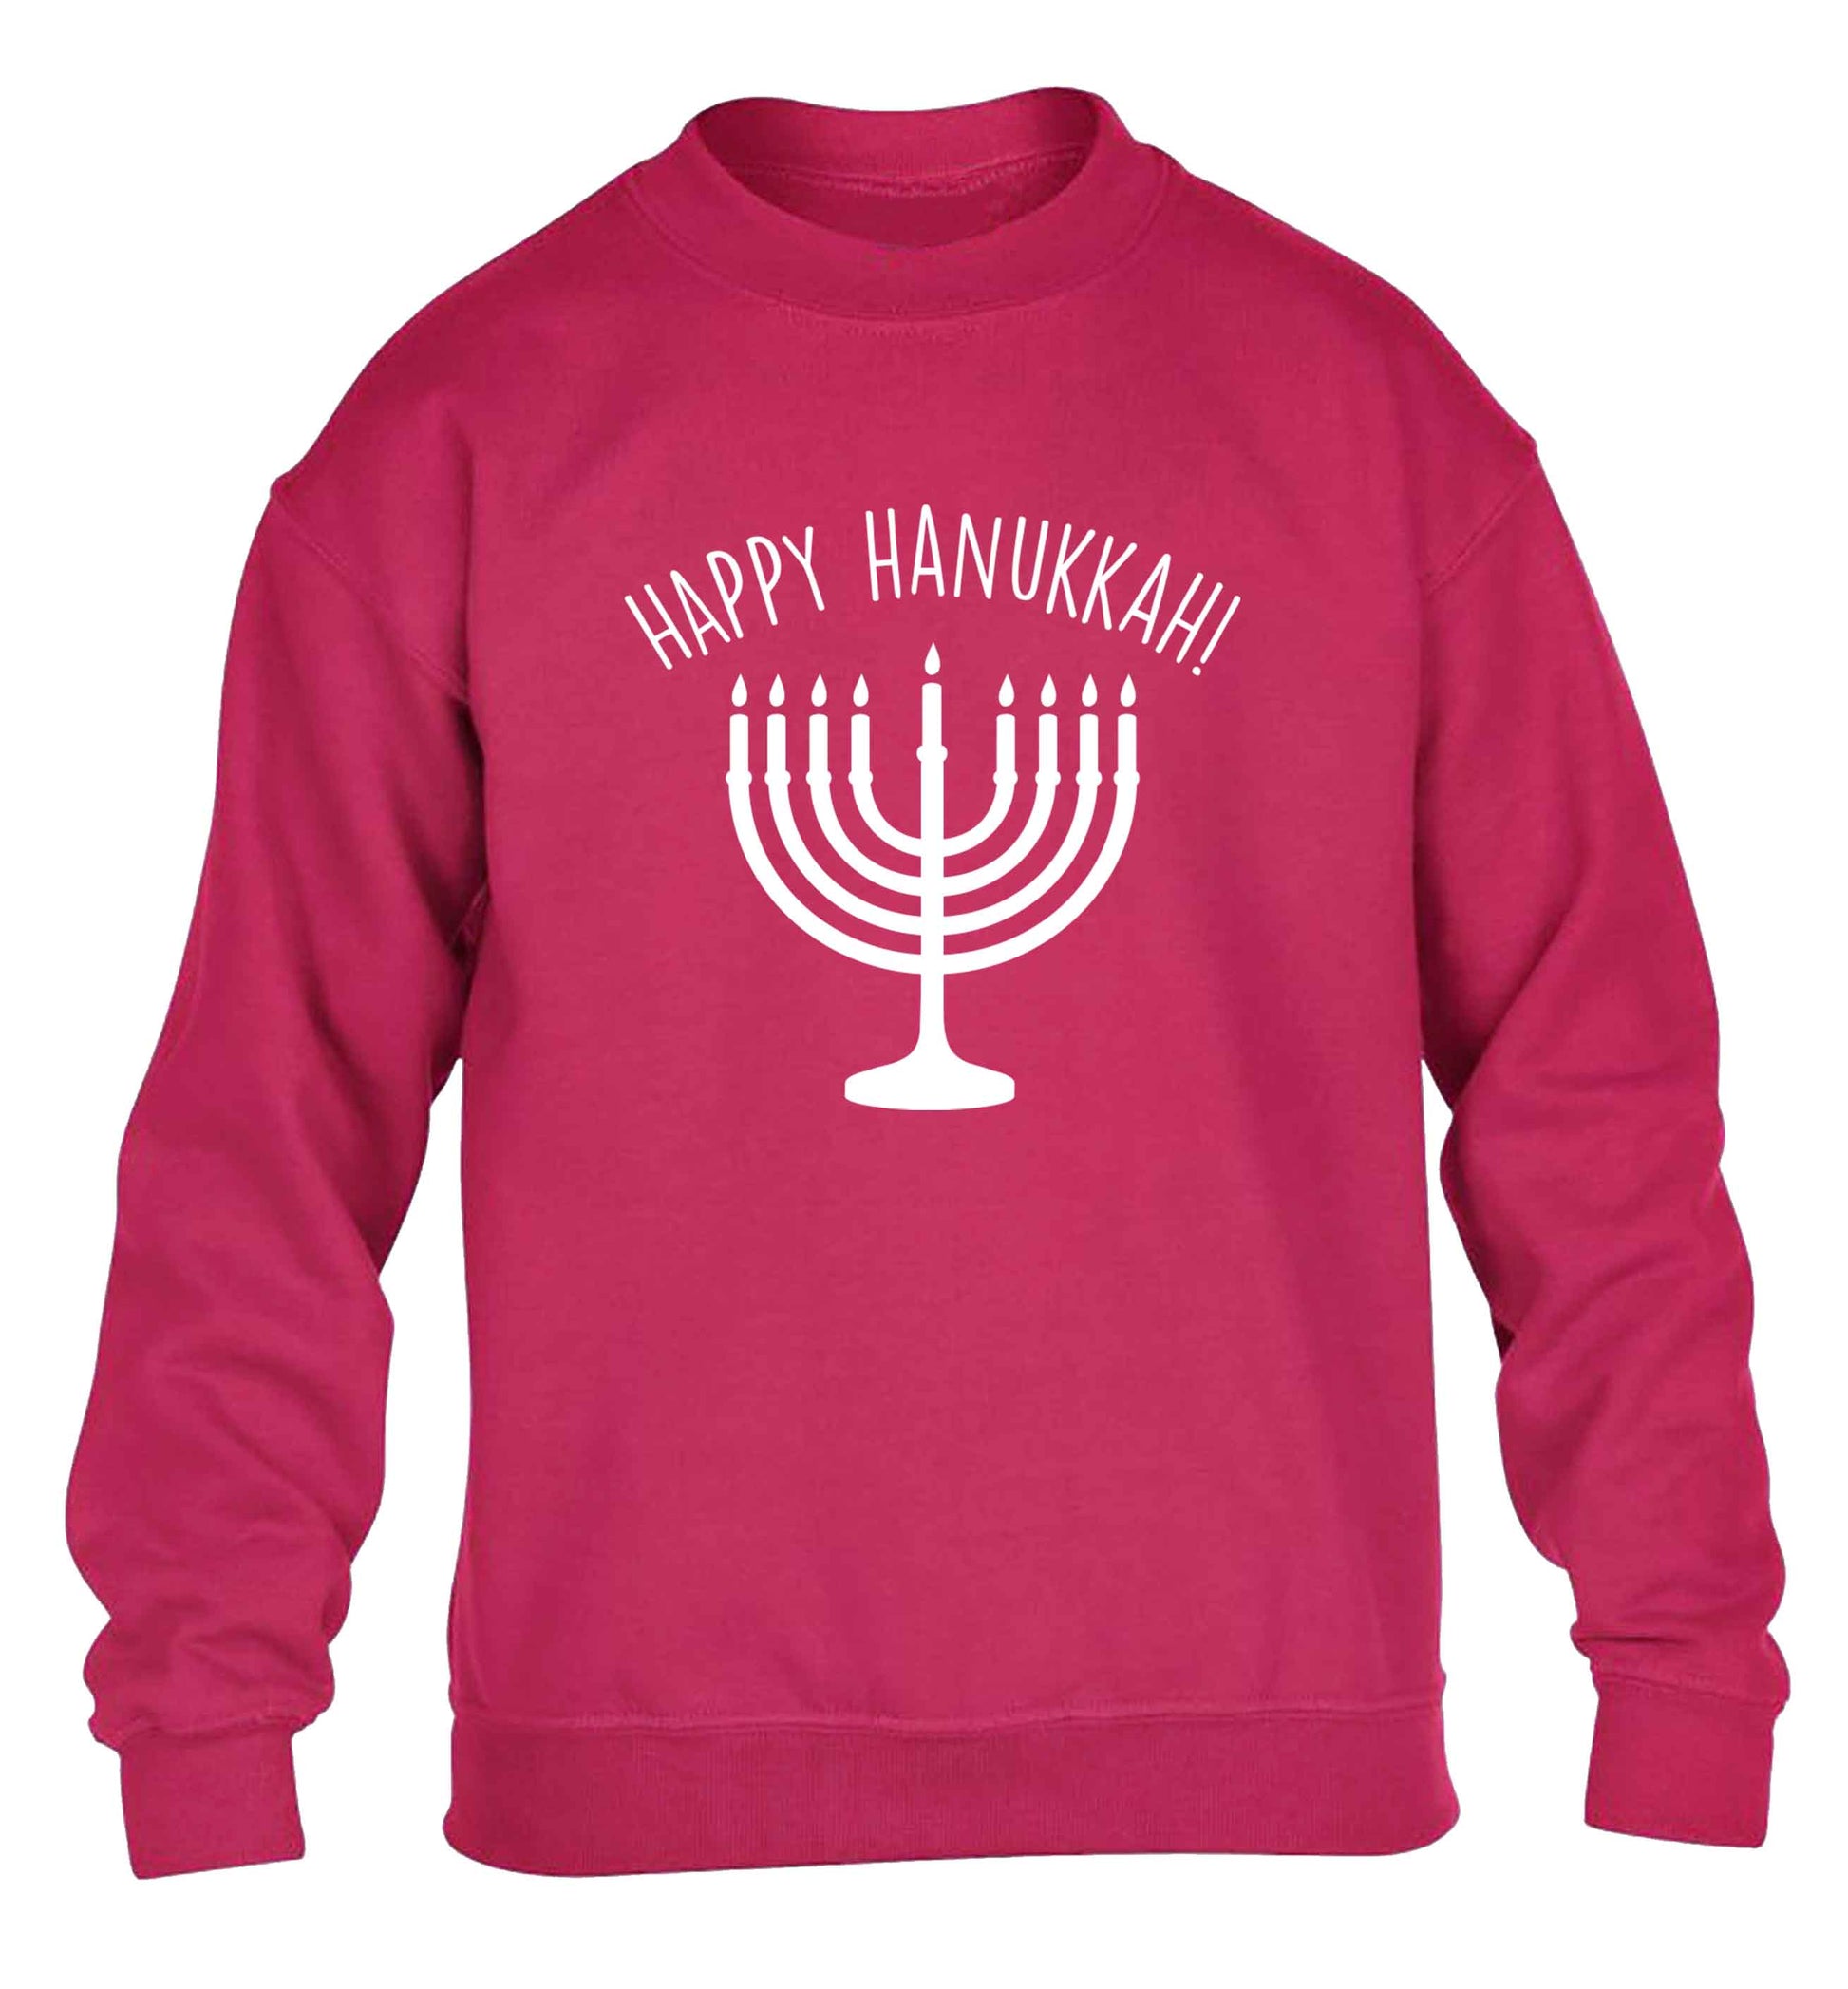 Happy hanukkah children's pink sweater 12-13 Years